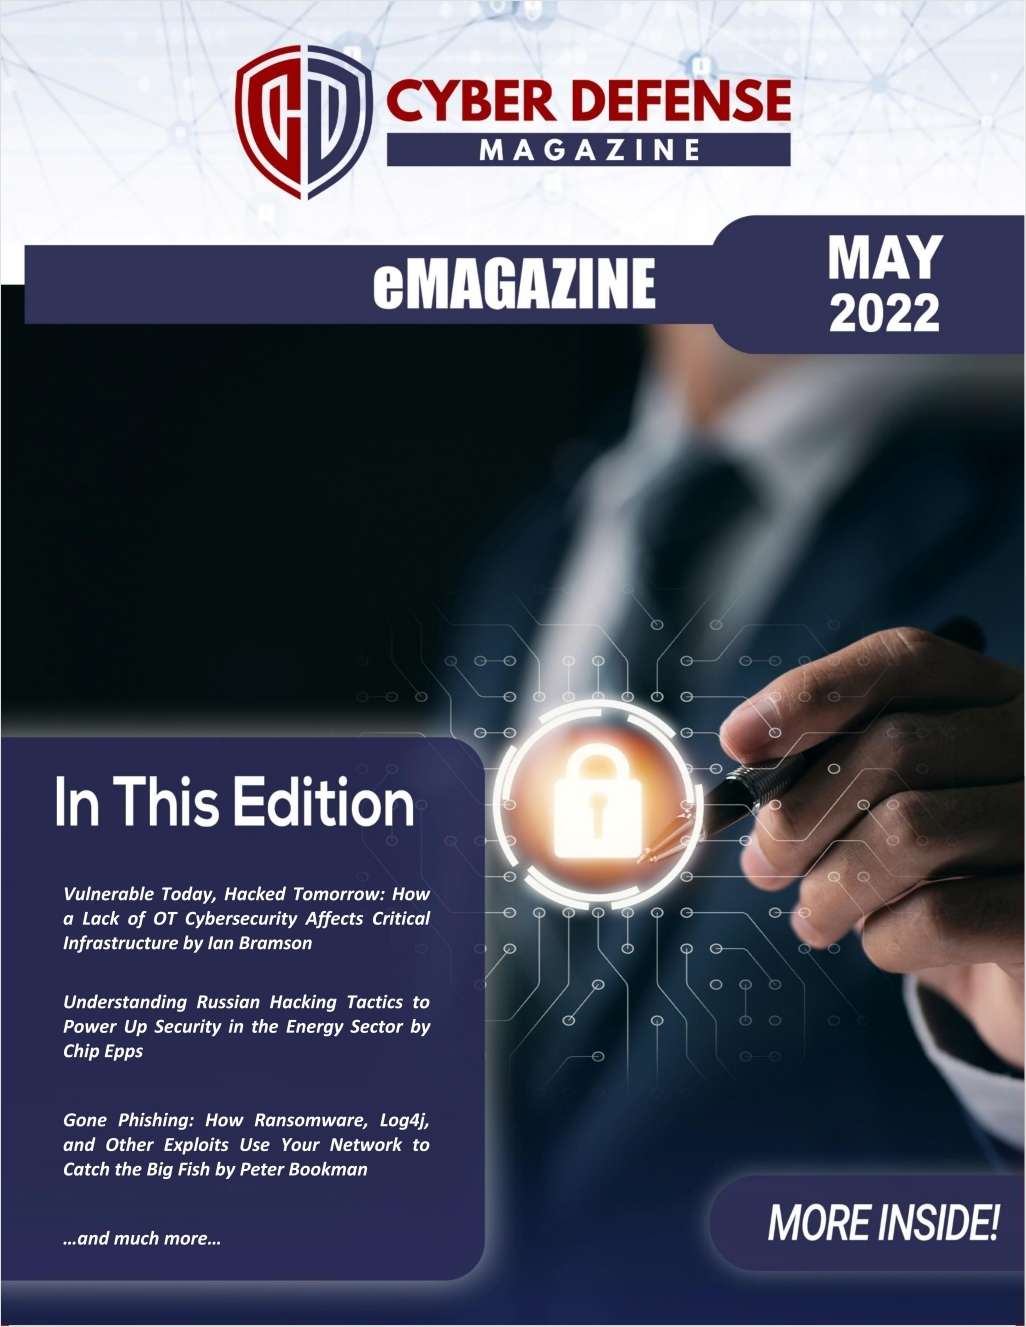 Cyber Defense Magazine May 2022 Edition